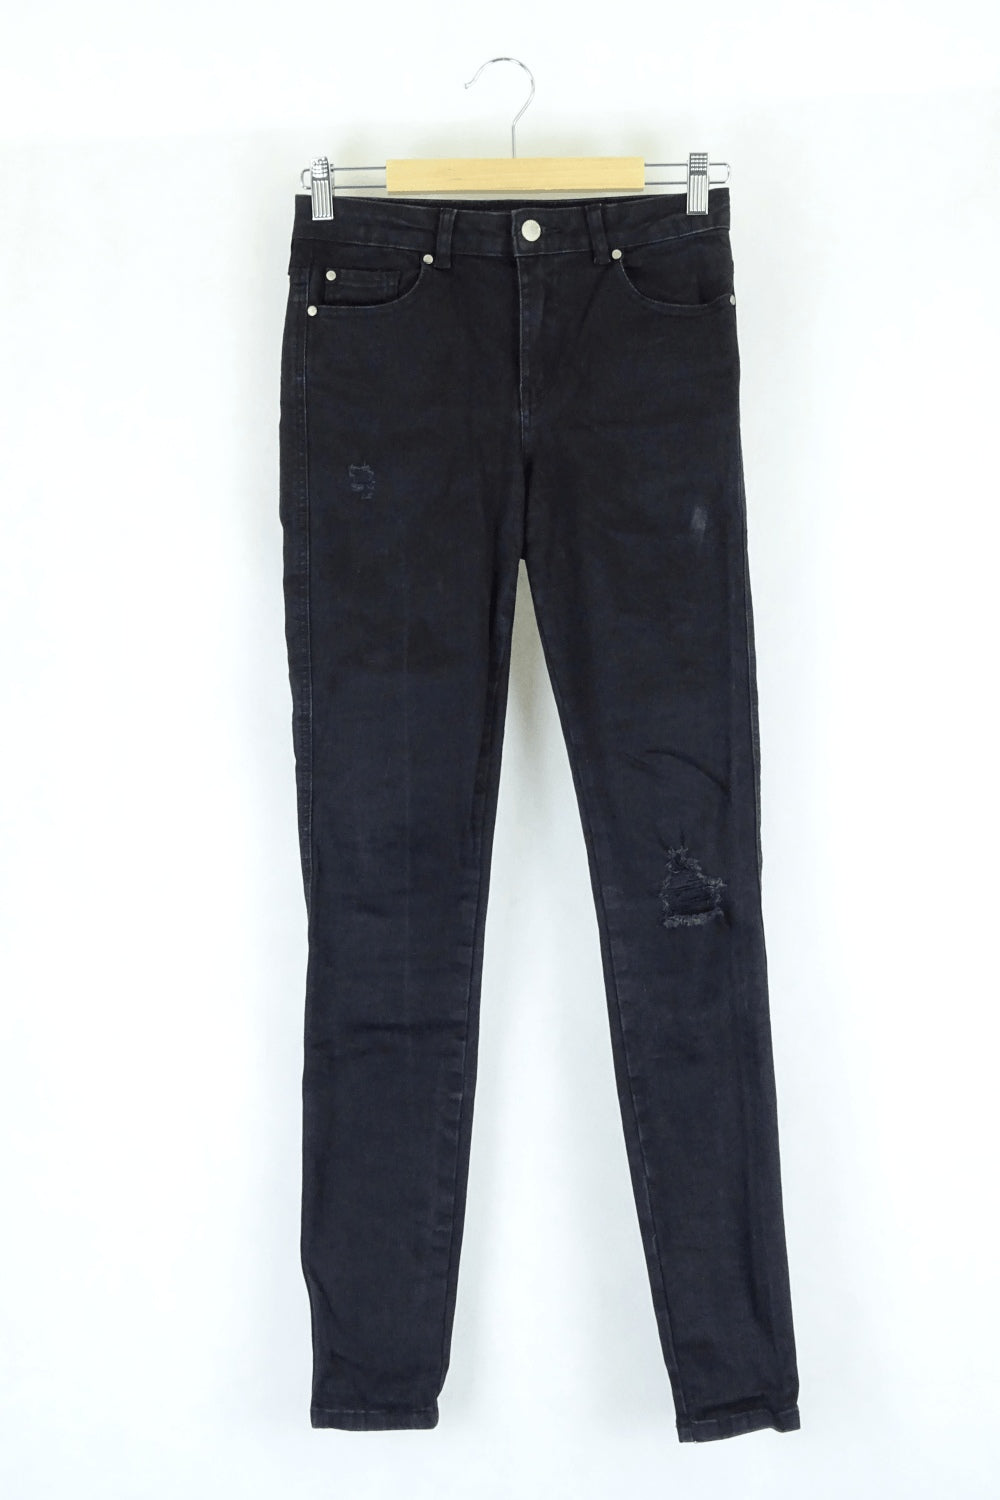 Forever New Distressed Black Skinny Jeans 8